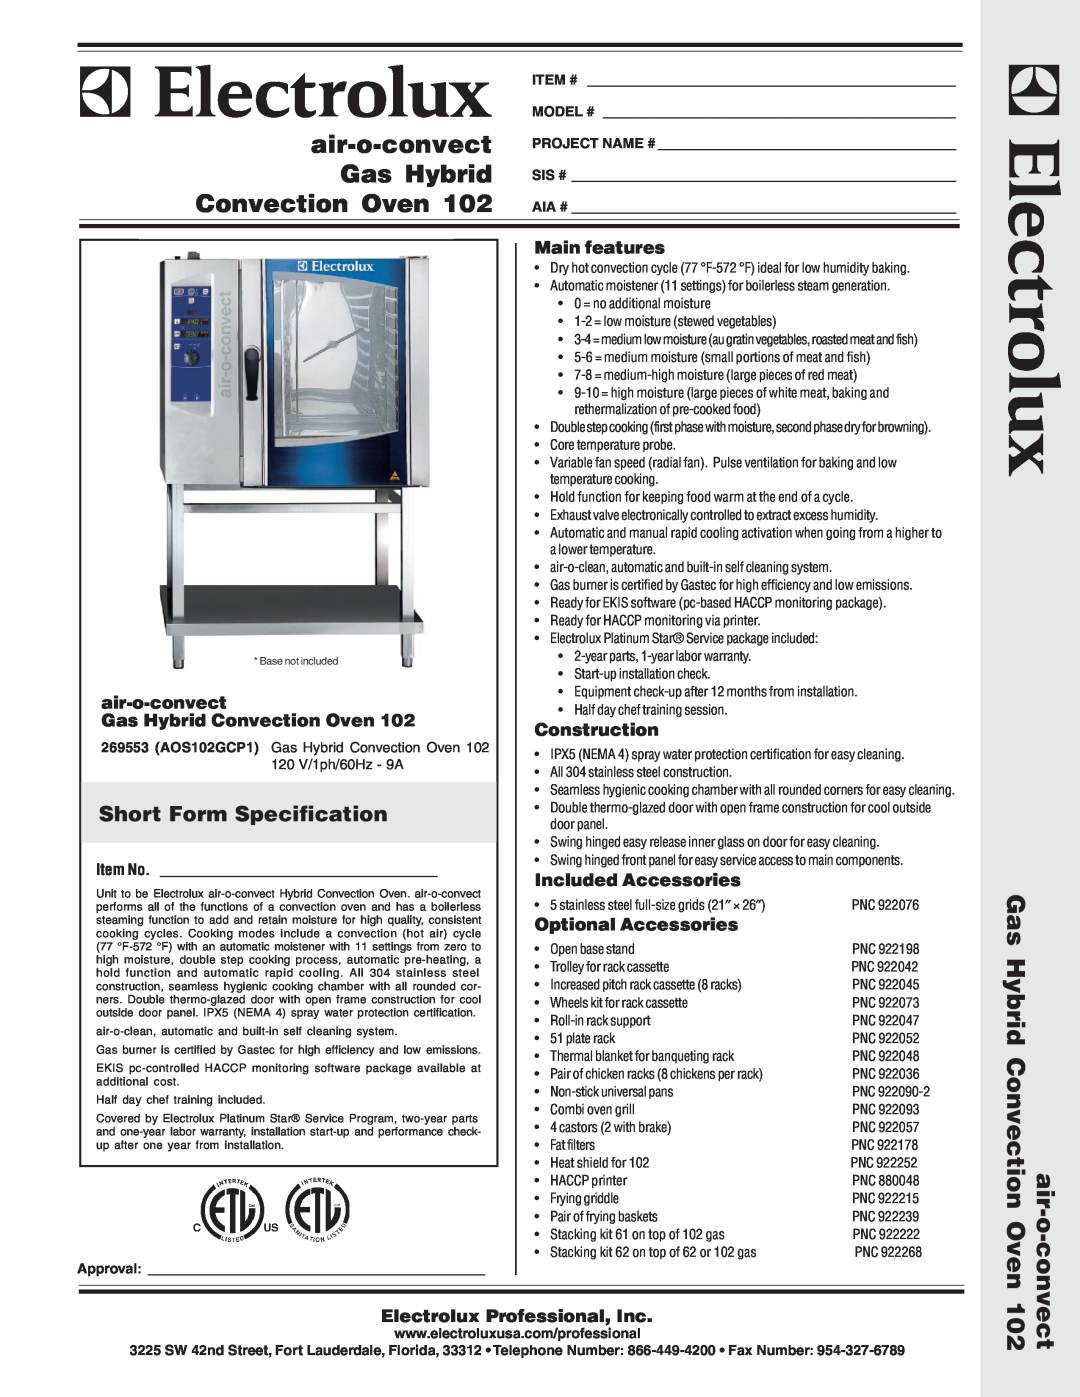 Electrolux 269553 (AOS102GCP1) warranty Short Form Specification, air-o-convect Gas Hybrid Convection Oven, Main features 